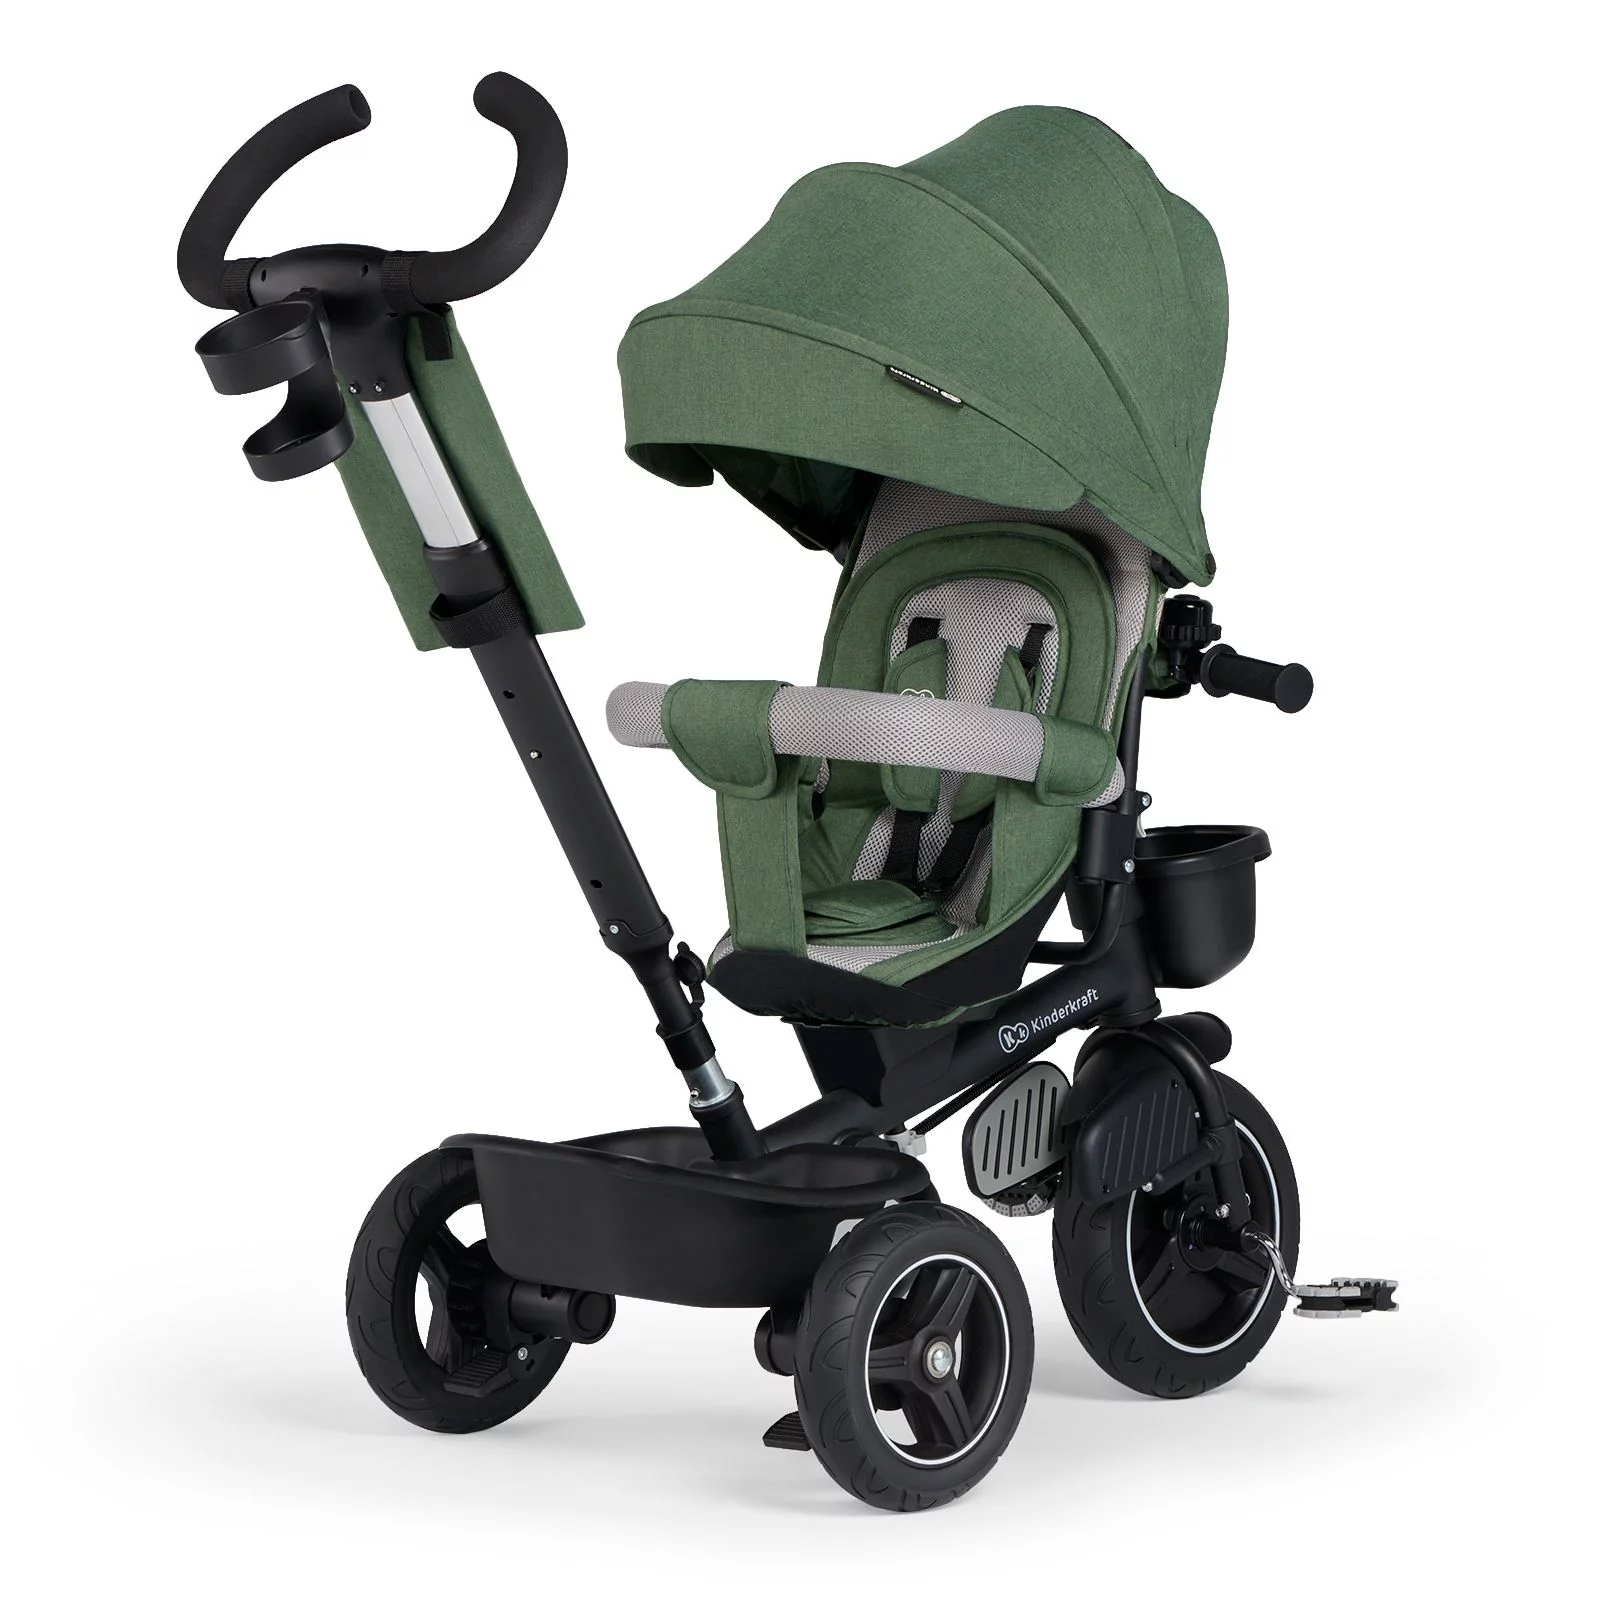 A green Spinstep stroller with a black handlebar